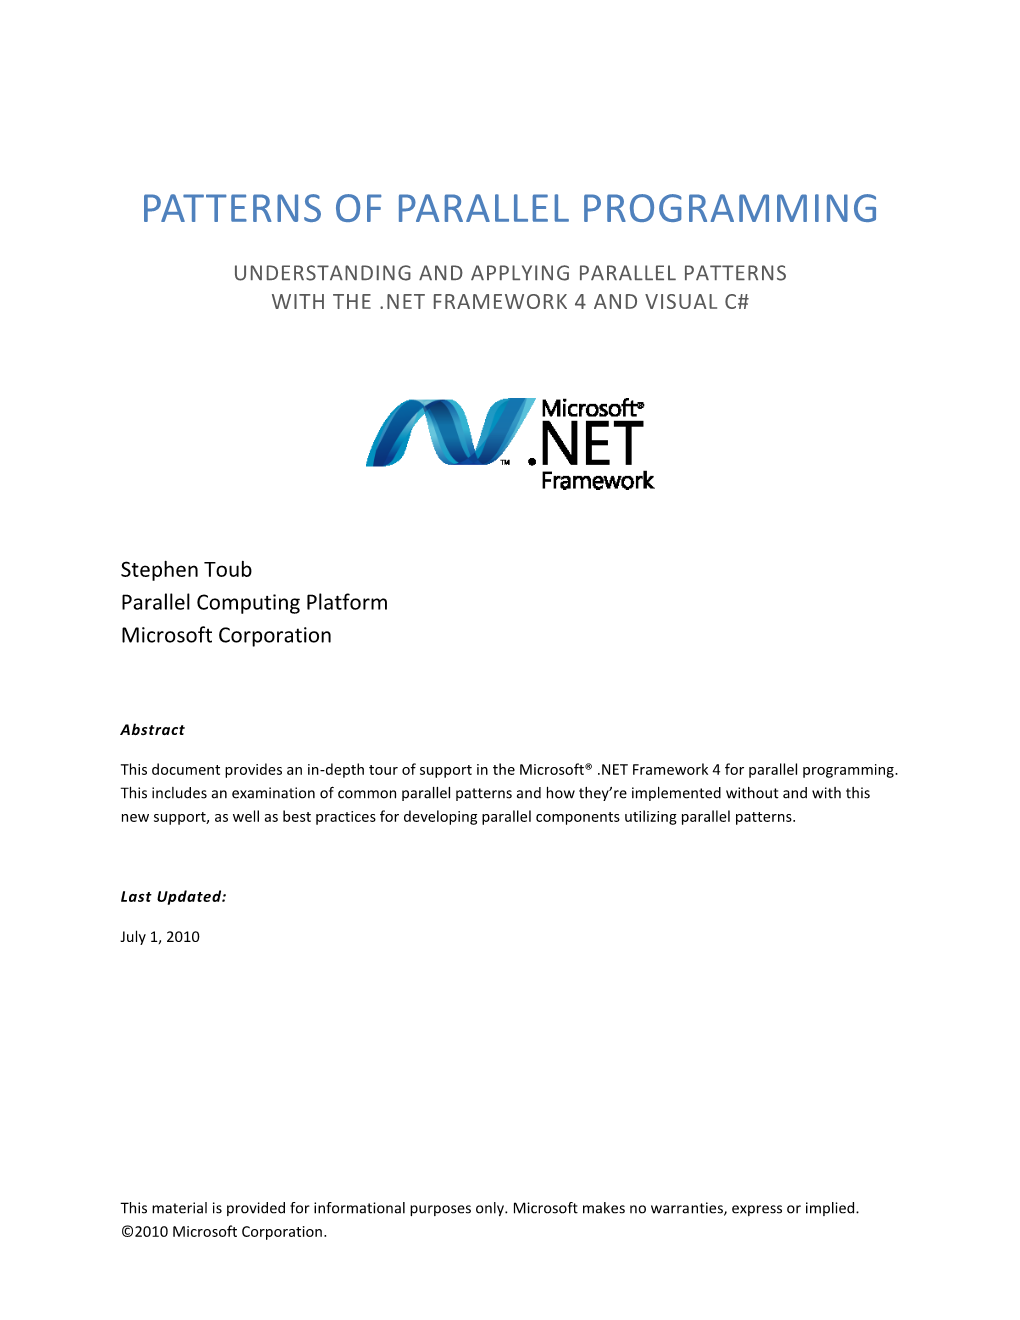 Patterns of Parallel Programming